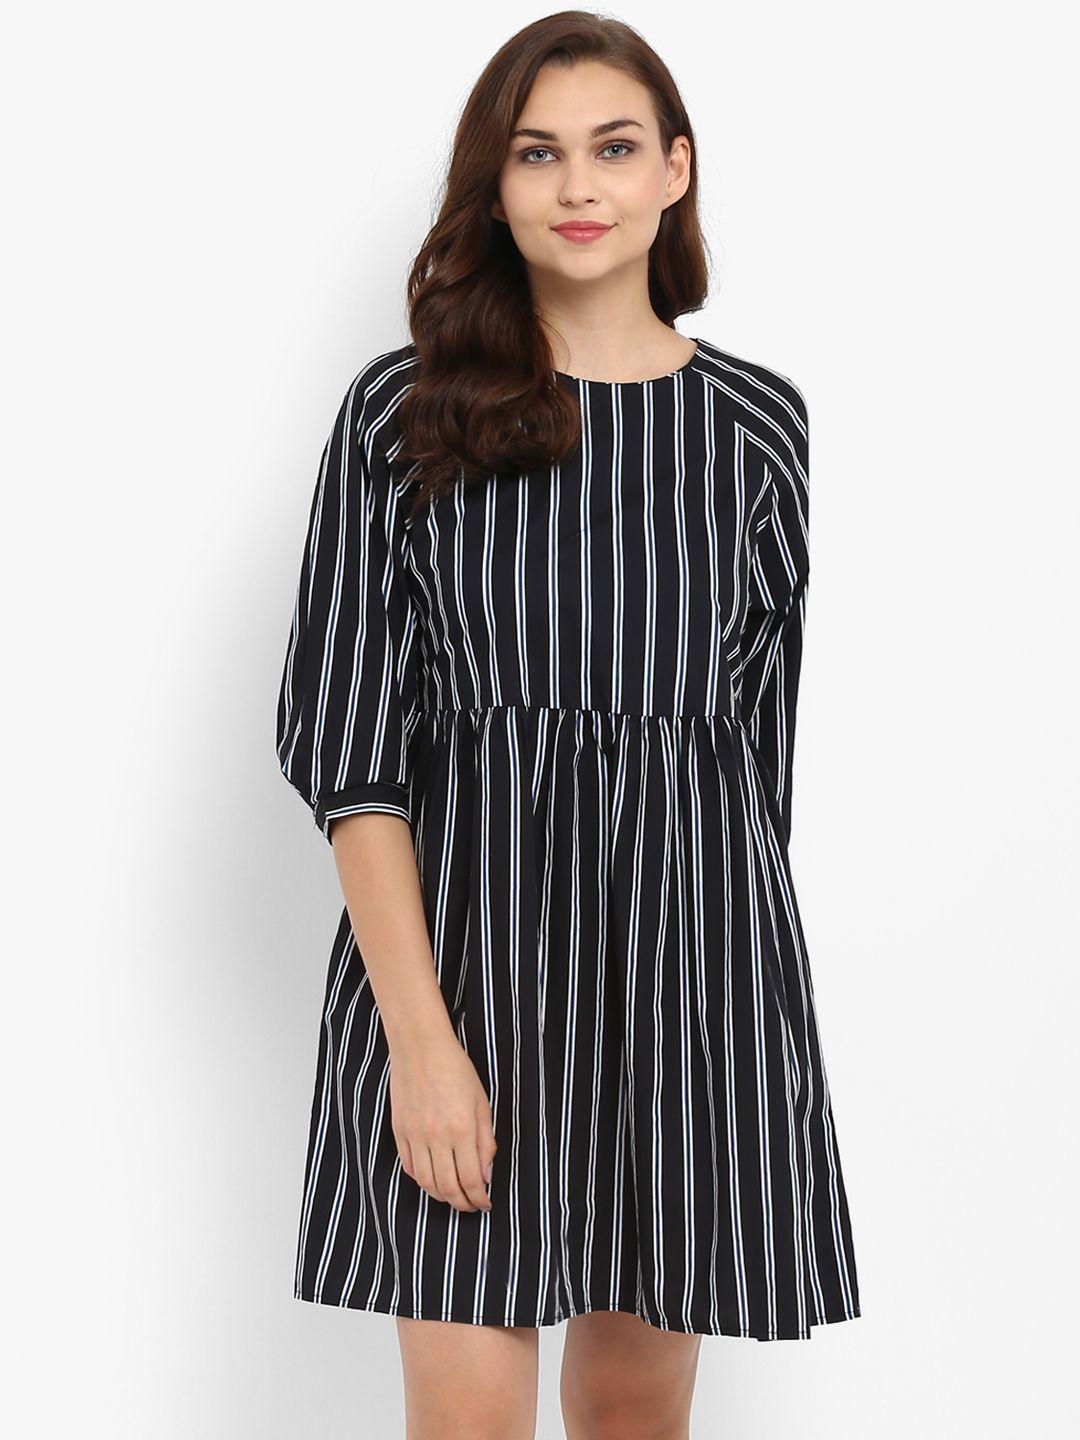 athah women navy blue & white striped cotton a-line dress